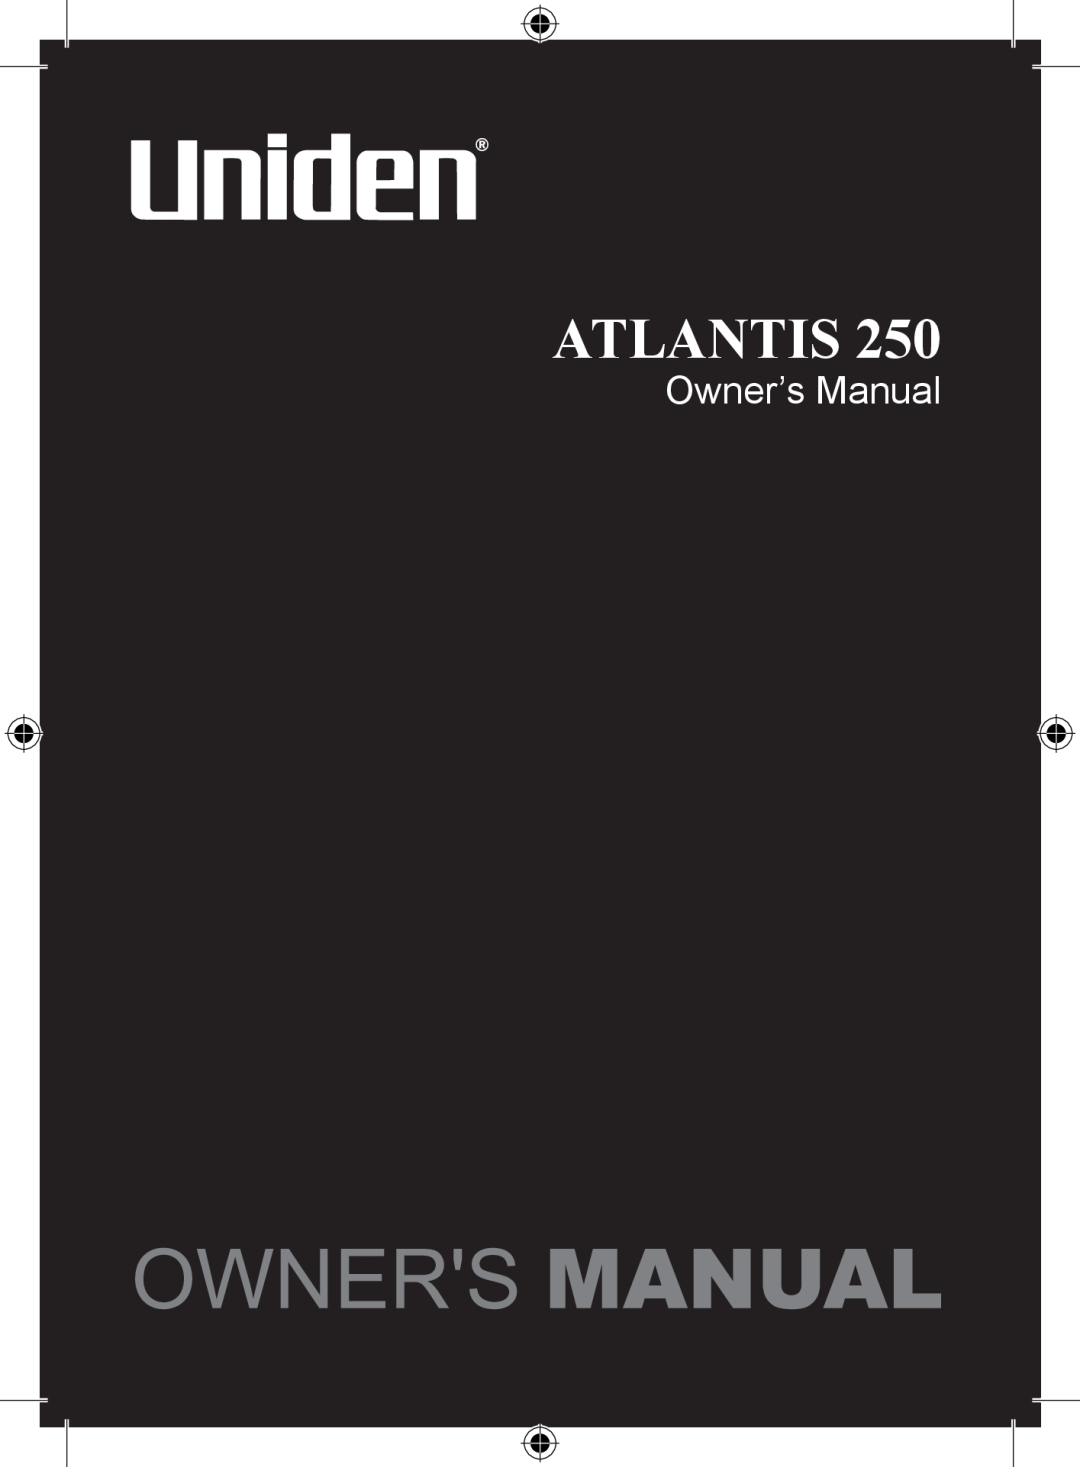 Uniden 250 owner manual Atlantis 